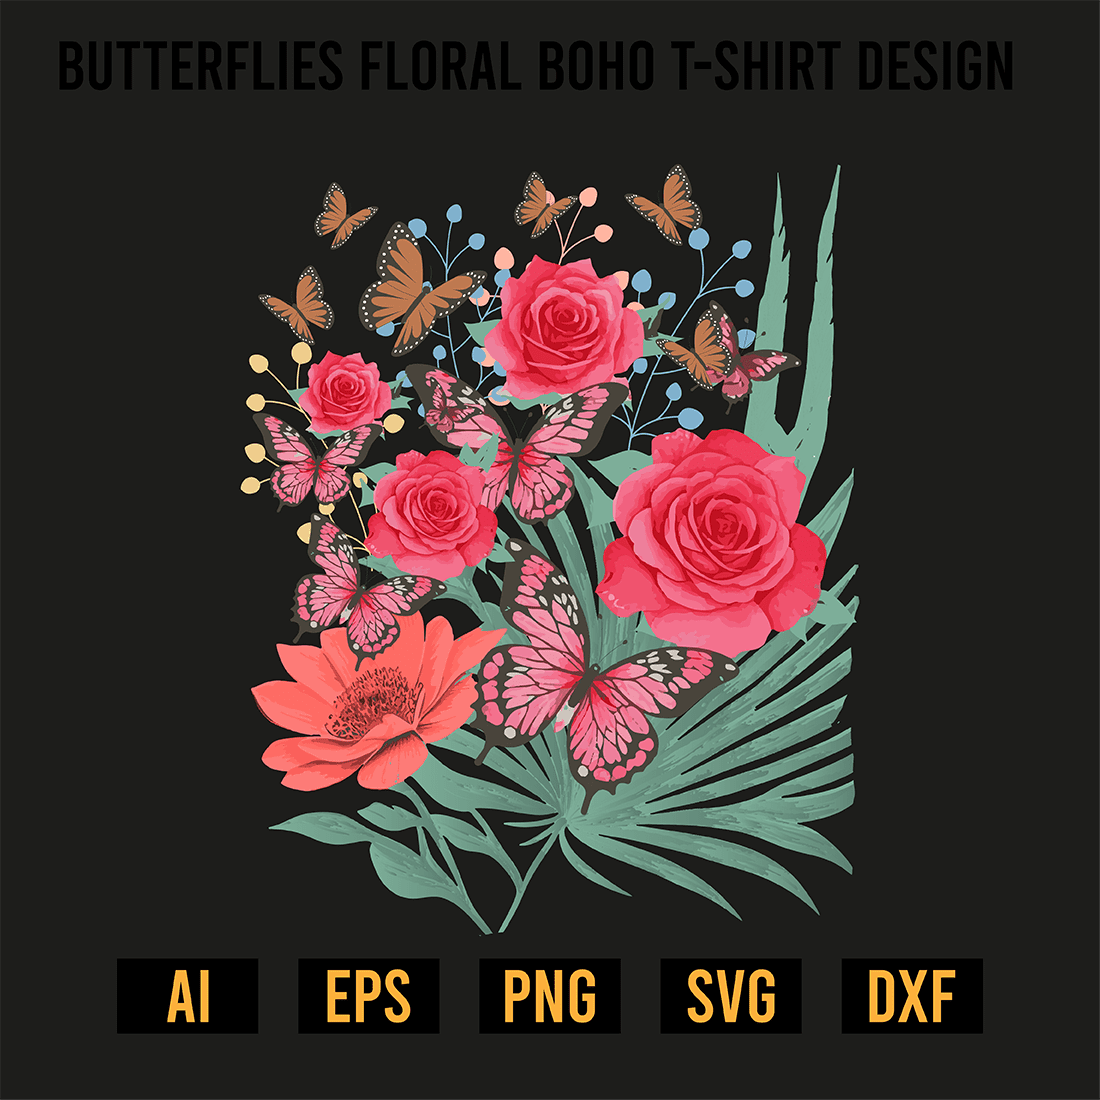 2 bundles t shirt designs roses vector, Roses vector, roses logo, Roses  vine Flower SVG, Rose